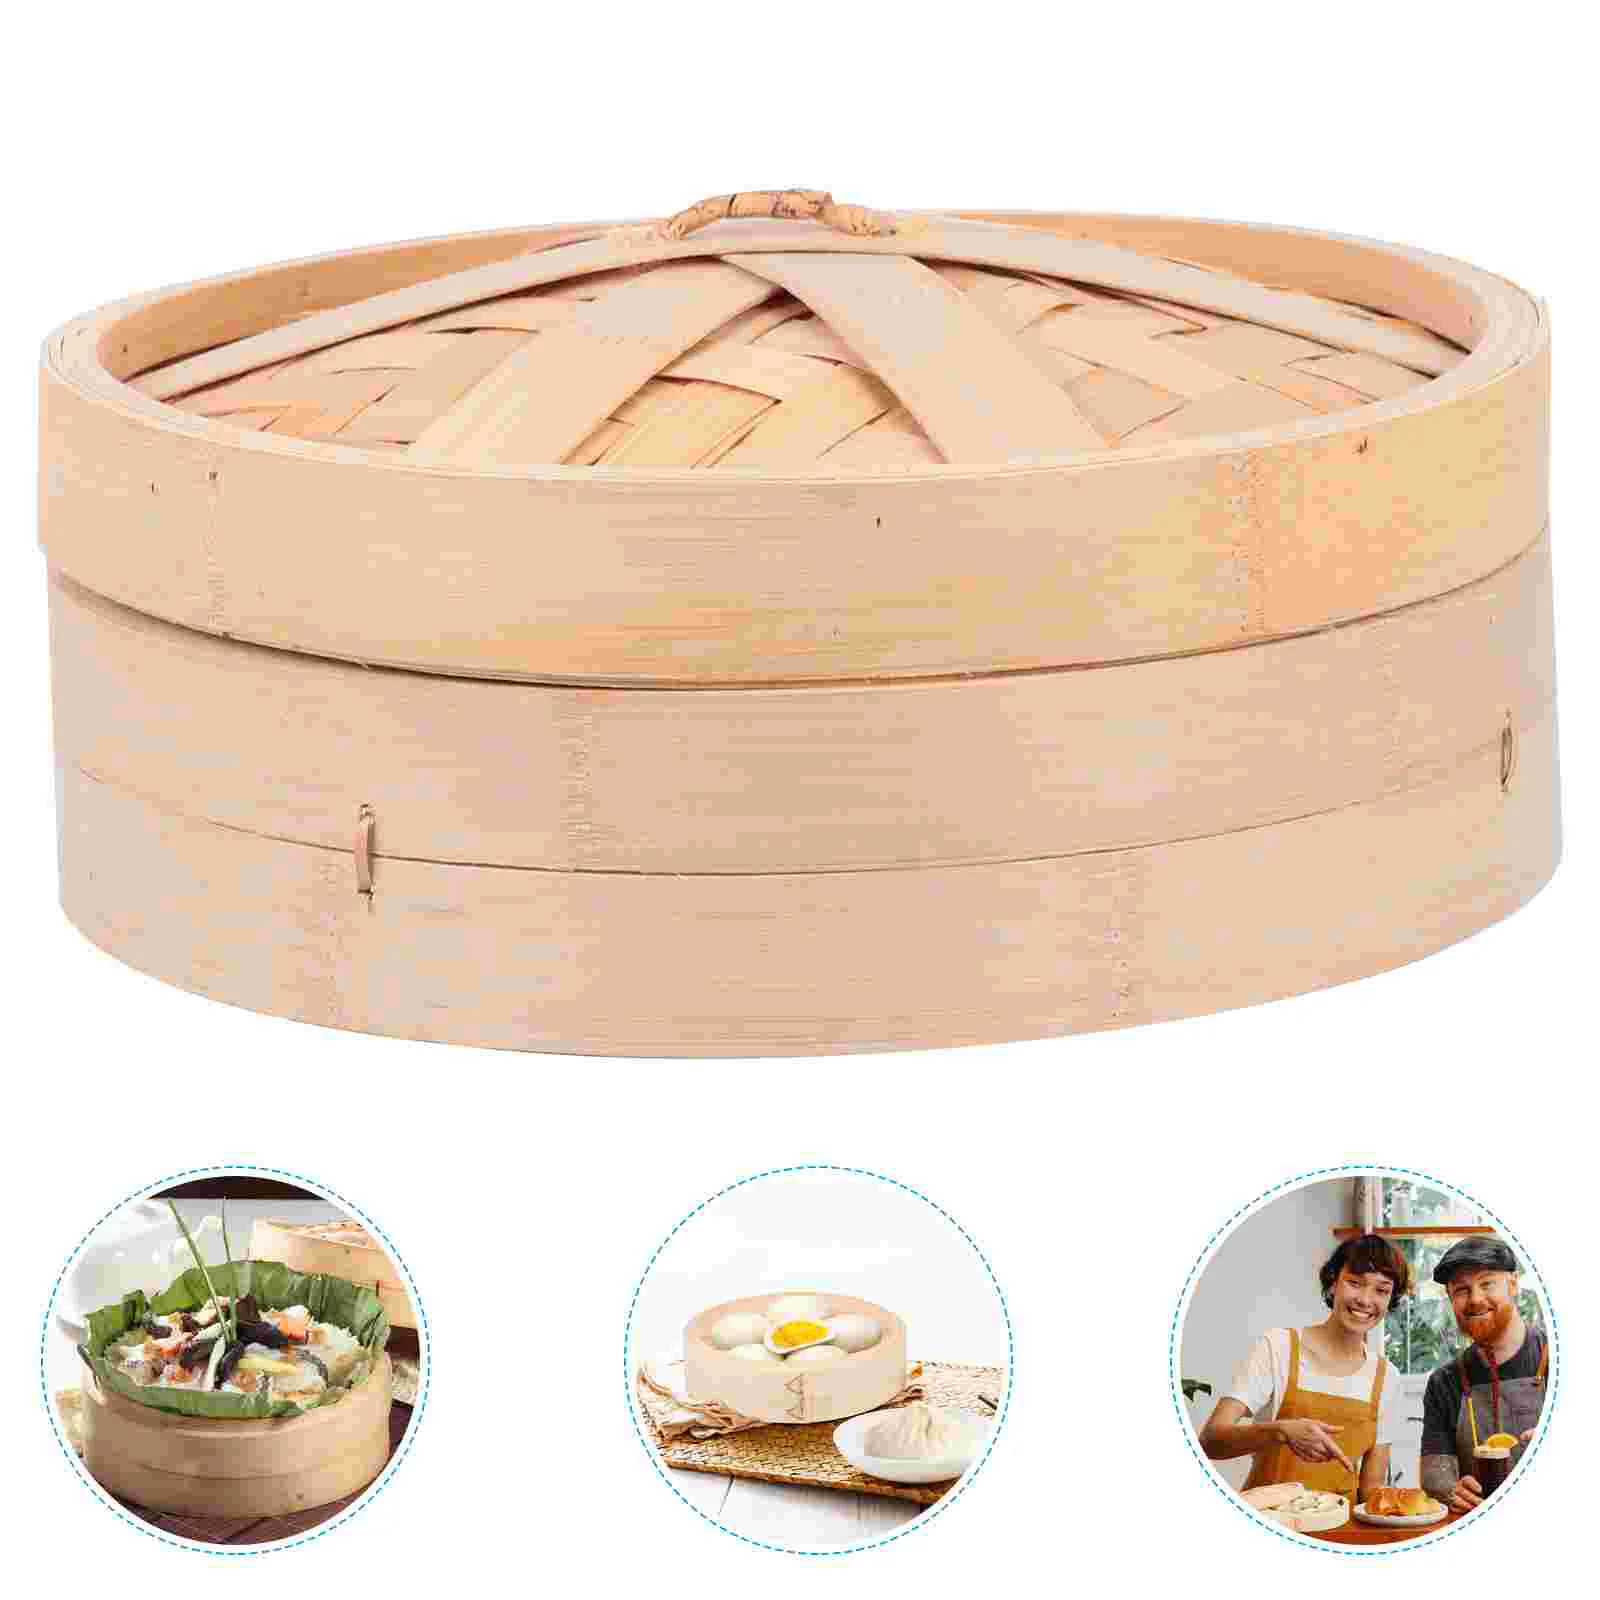 

1 Set 26cm Steamer with Lid Traditional Healthy Chinese Steamer Basket For Vegetables Chicken Dumplings Bao Bun